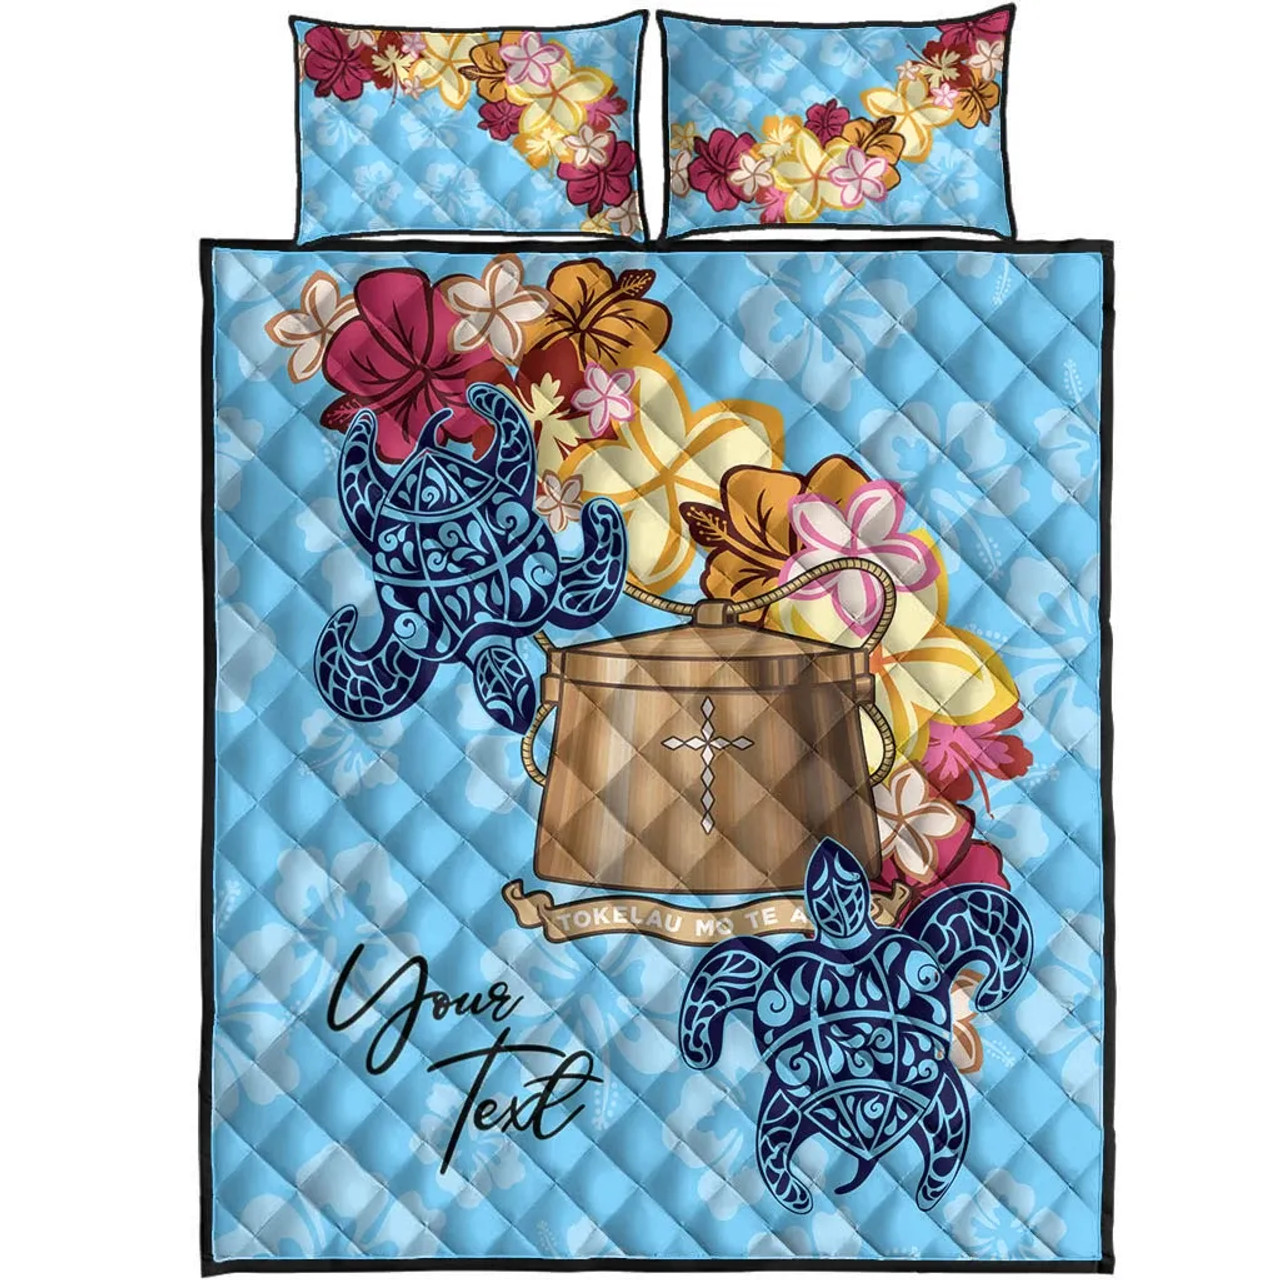 Tokelau Custom Personalised Quilt Bed Set - Tropical Style 4